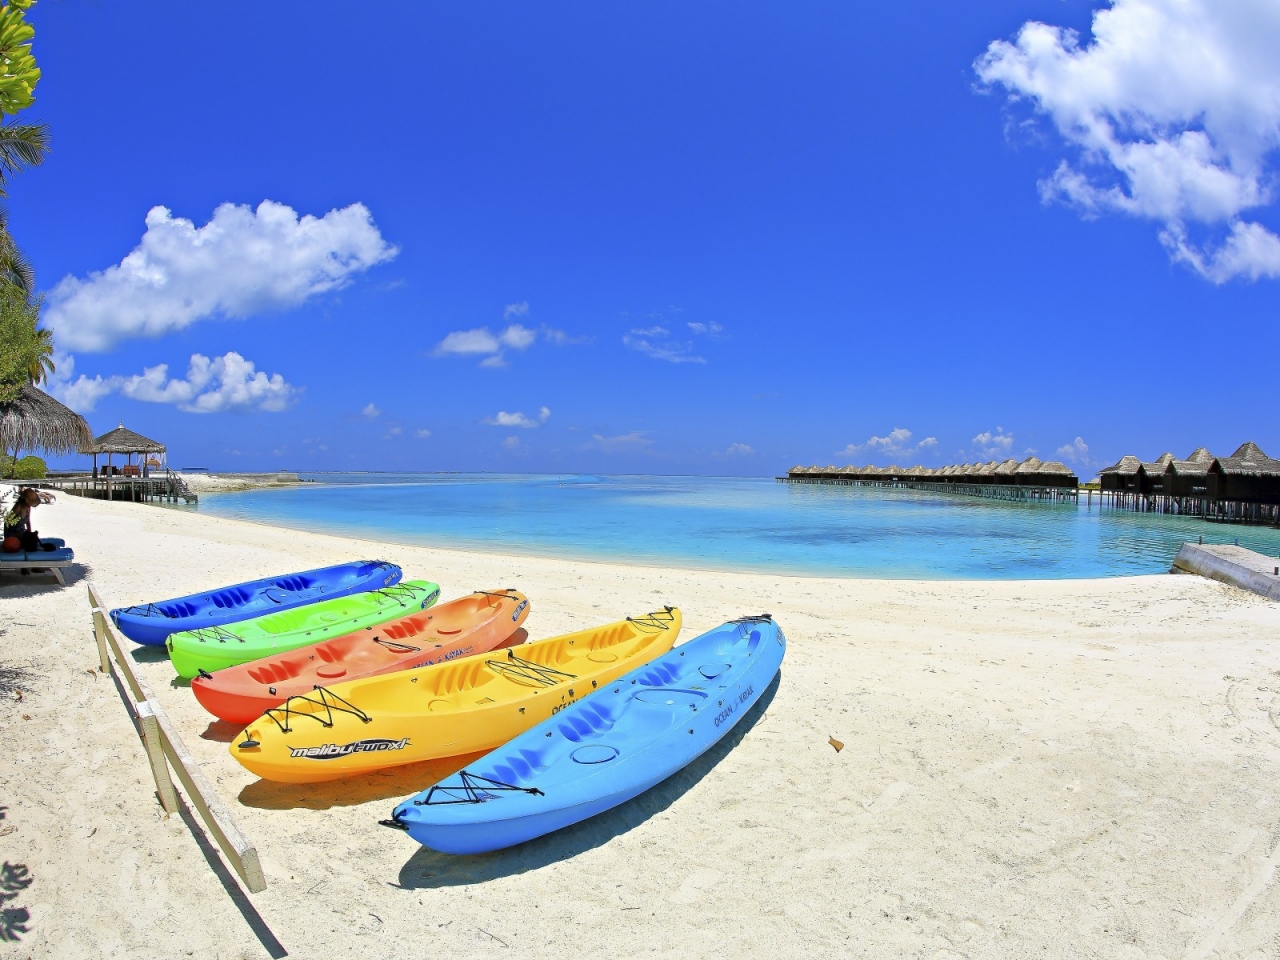 Maldives Beach Corner for 1280 x 960 resolution